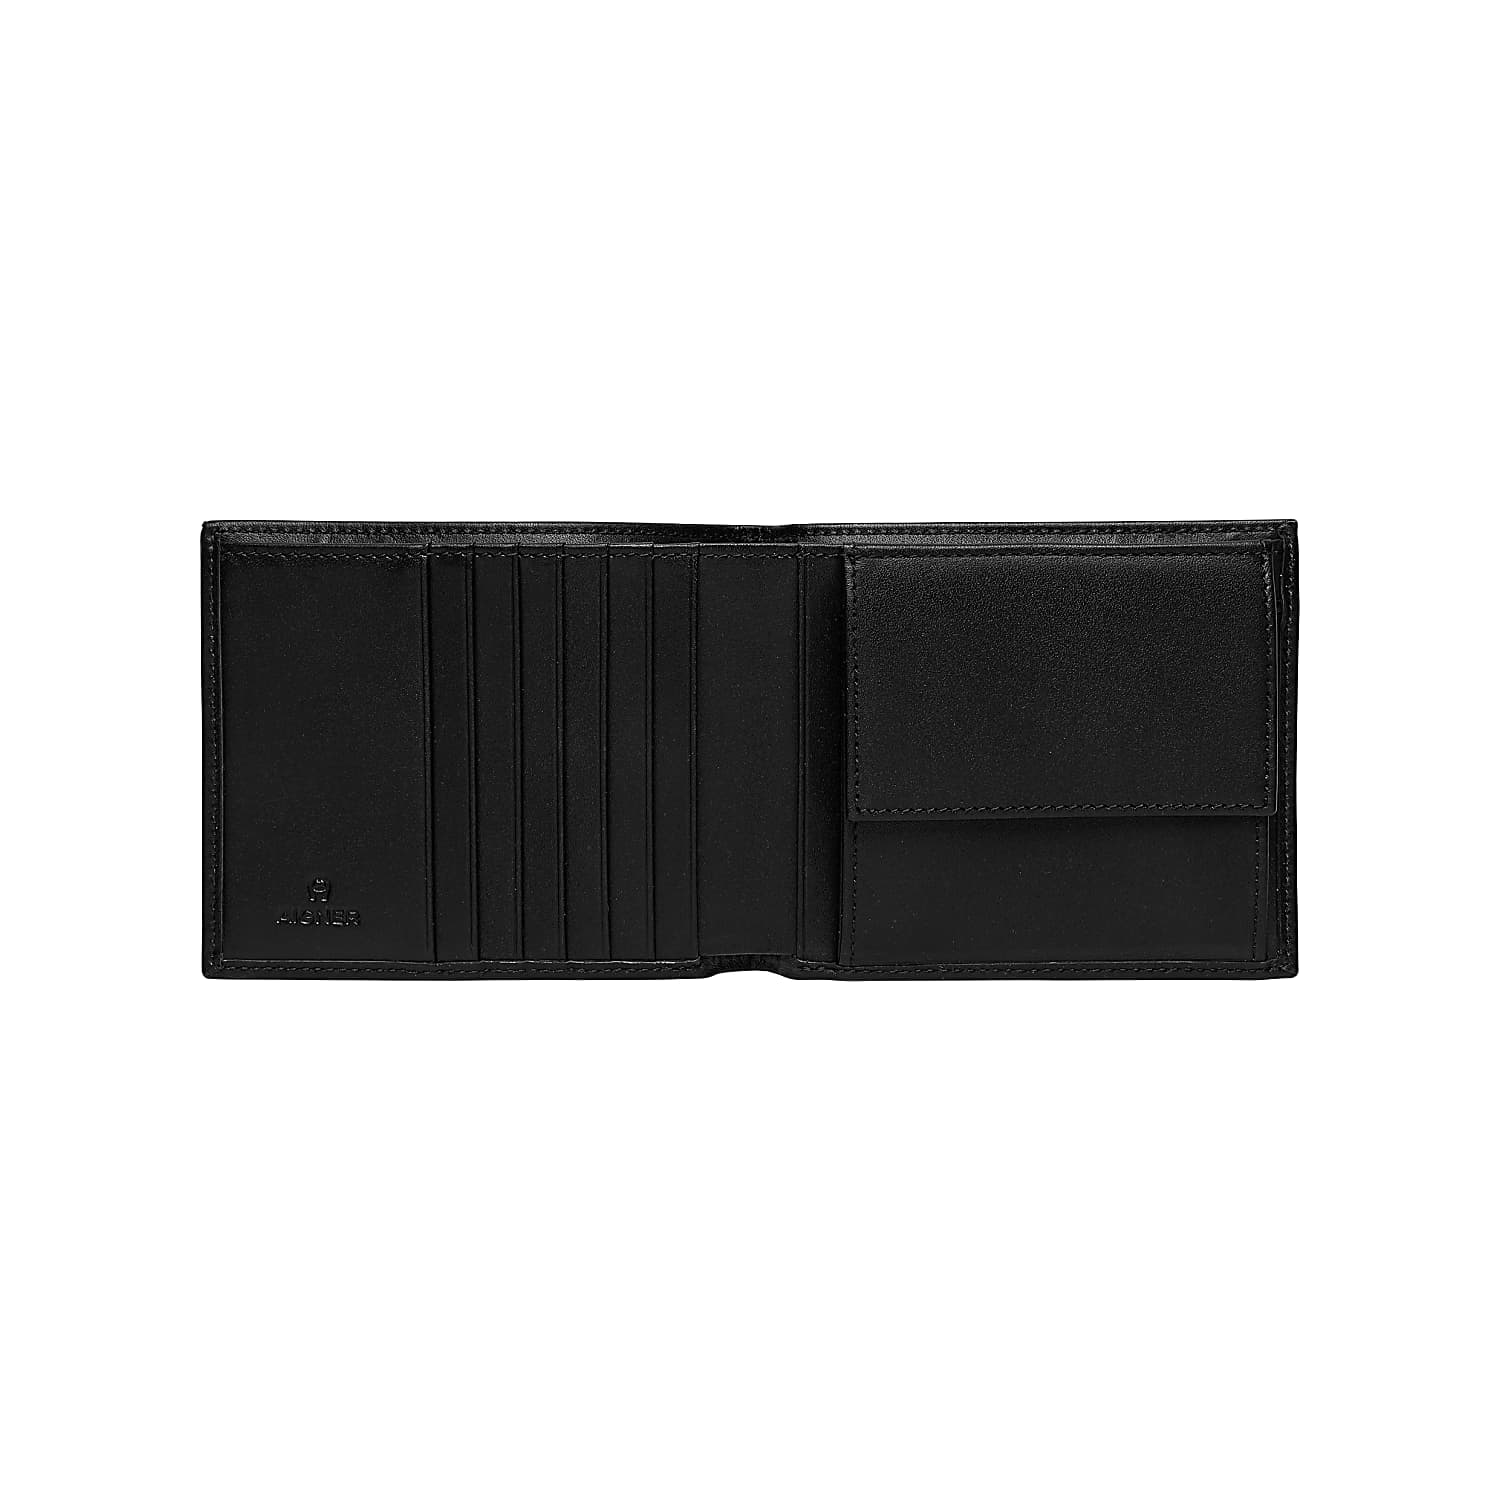 Basics Combination wallet